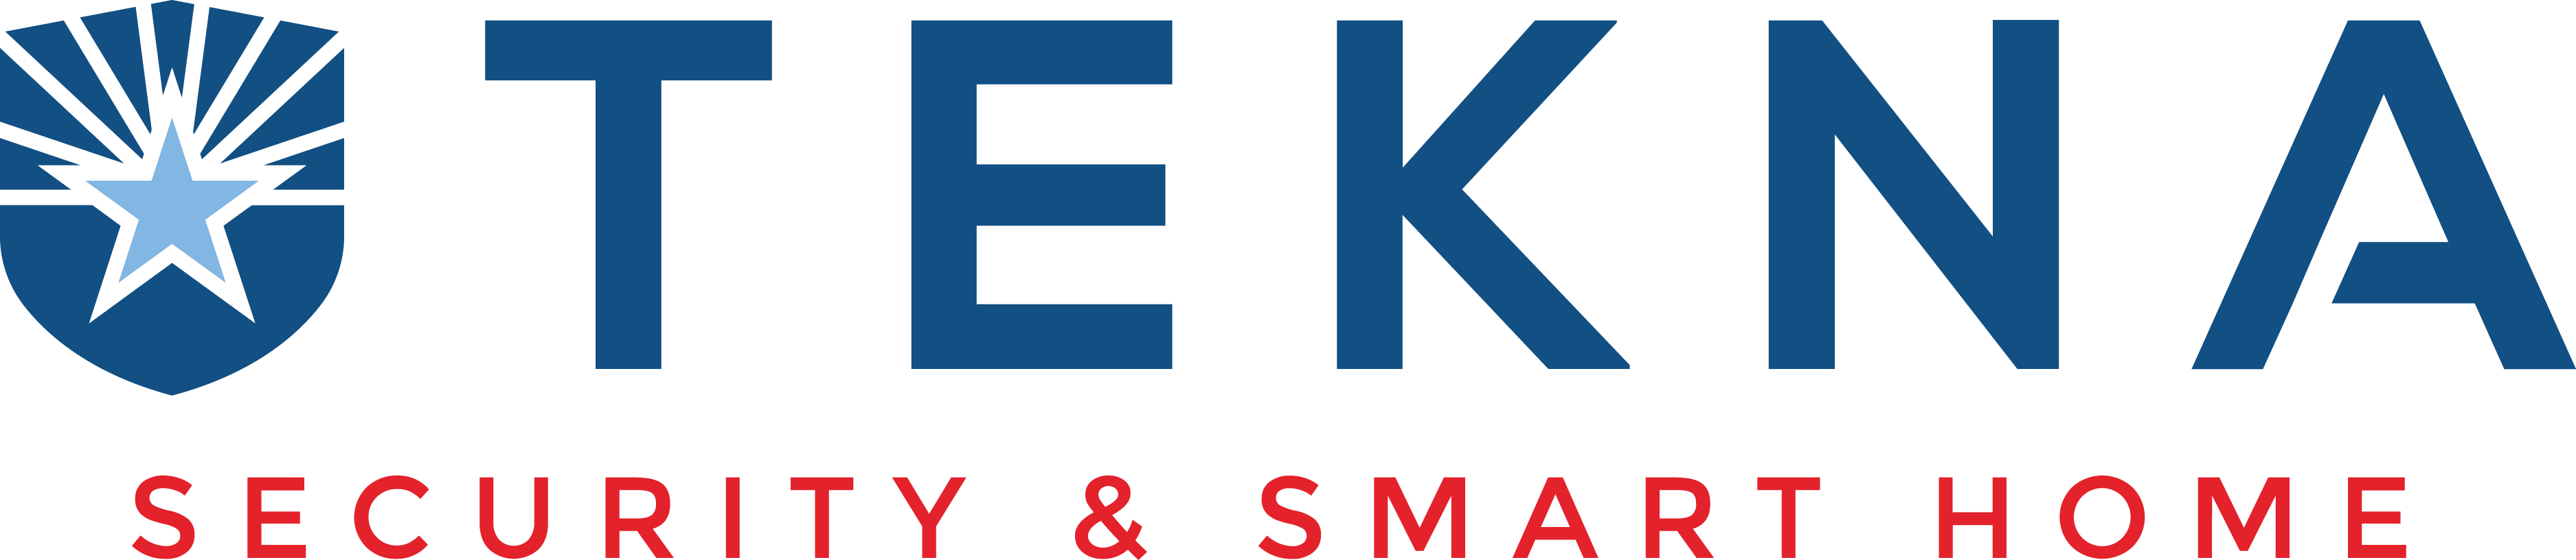 Tekna Security and Smarthome logo